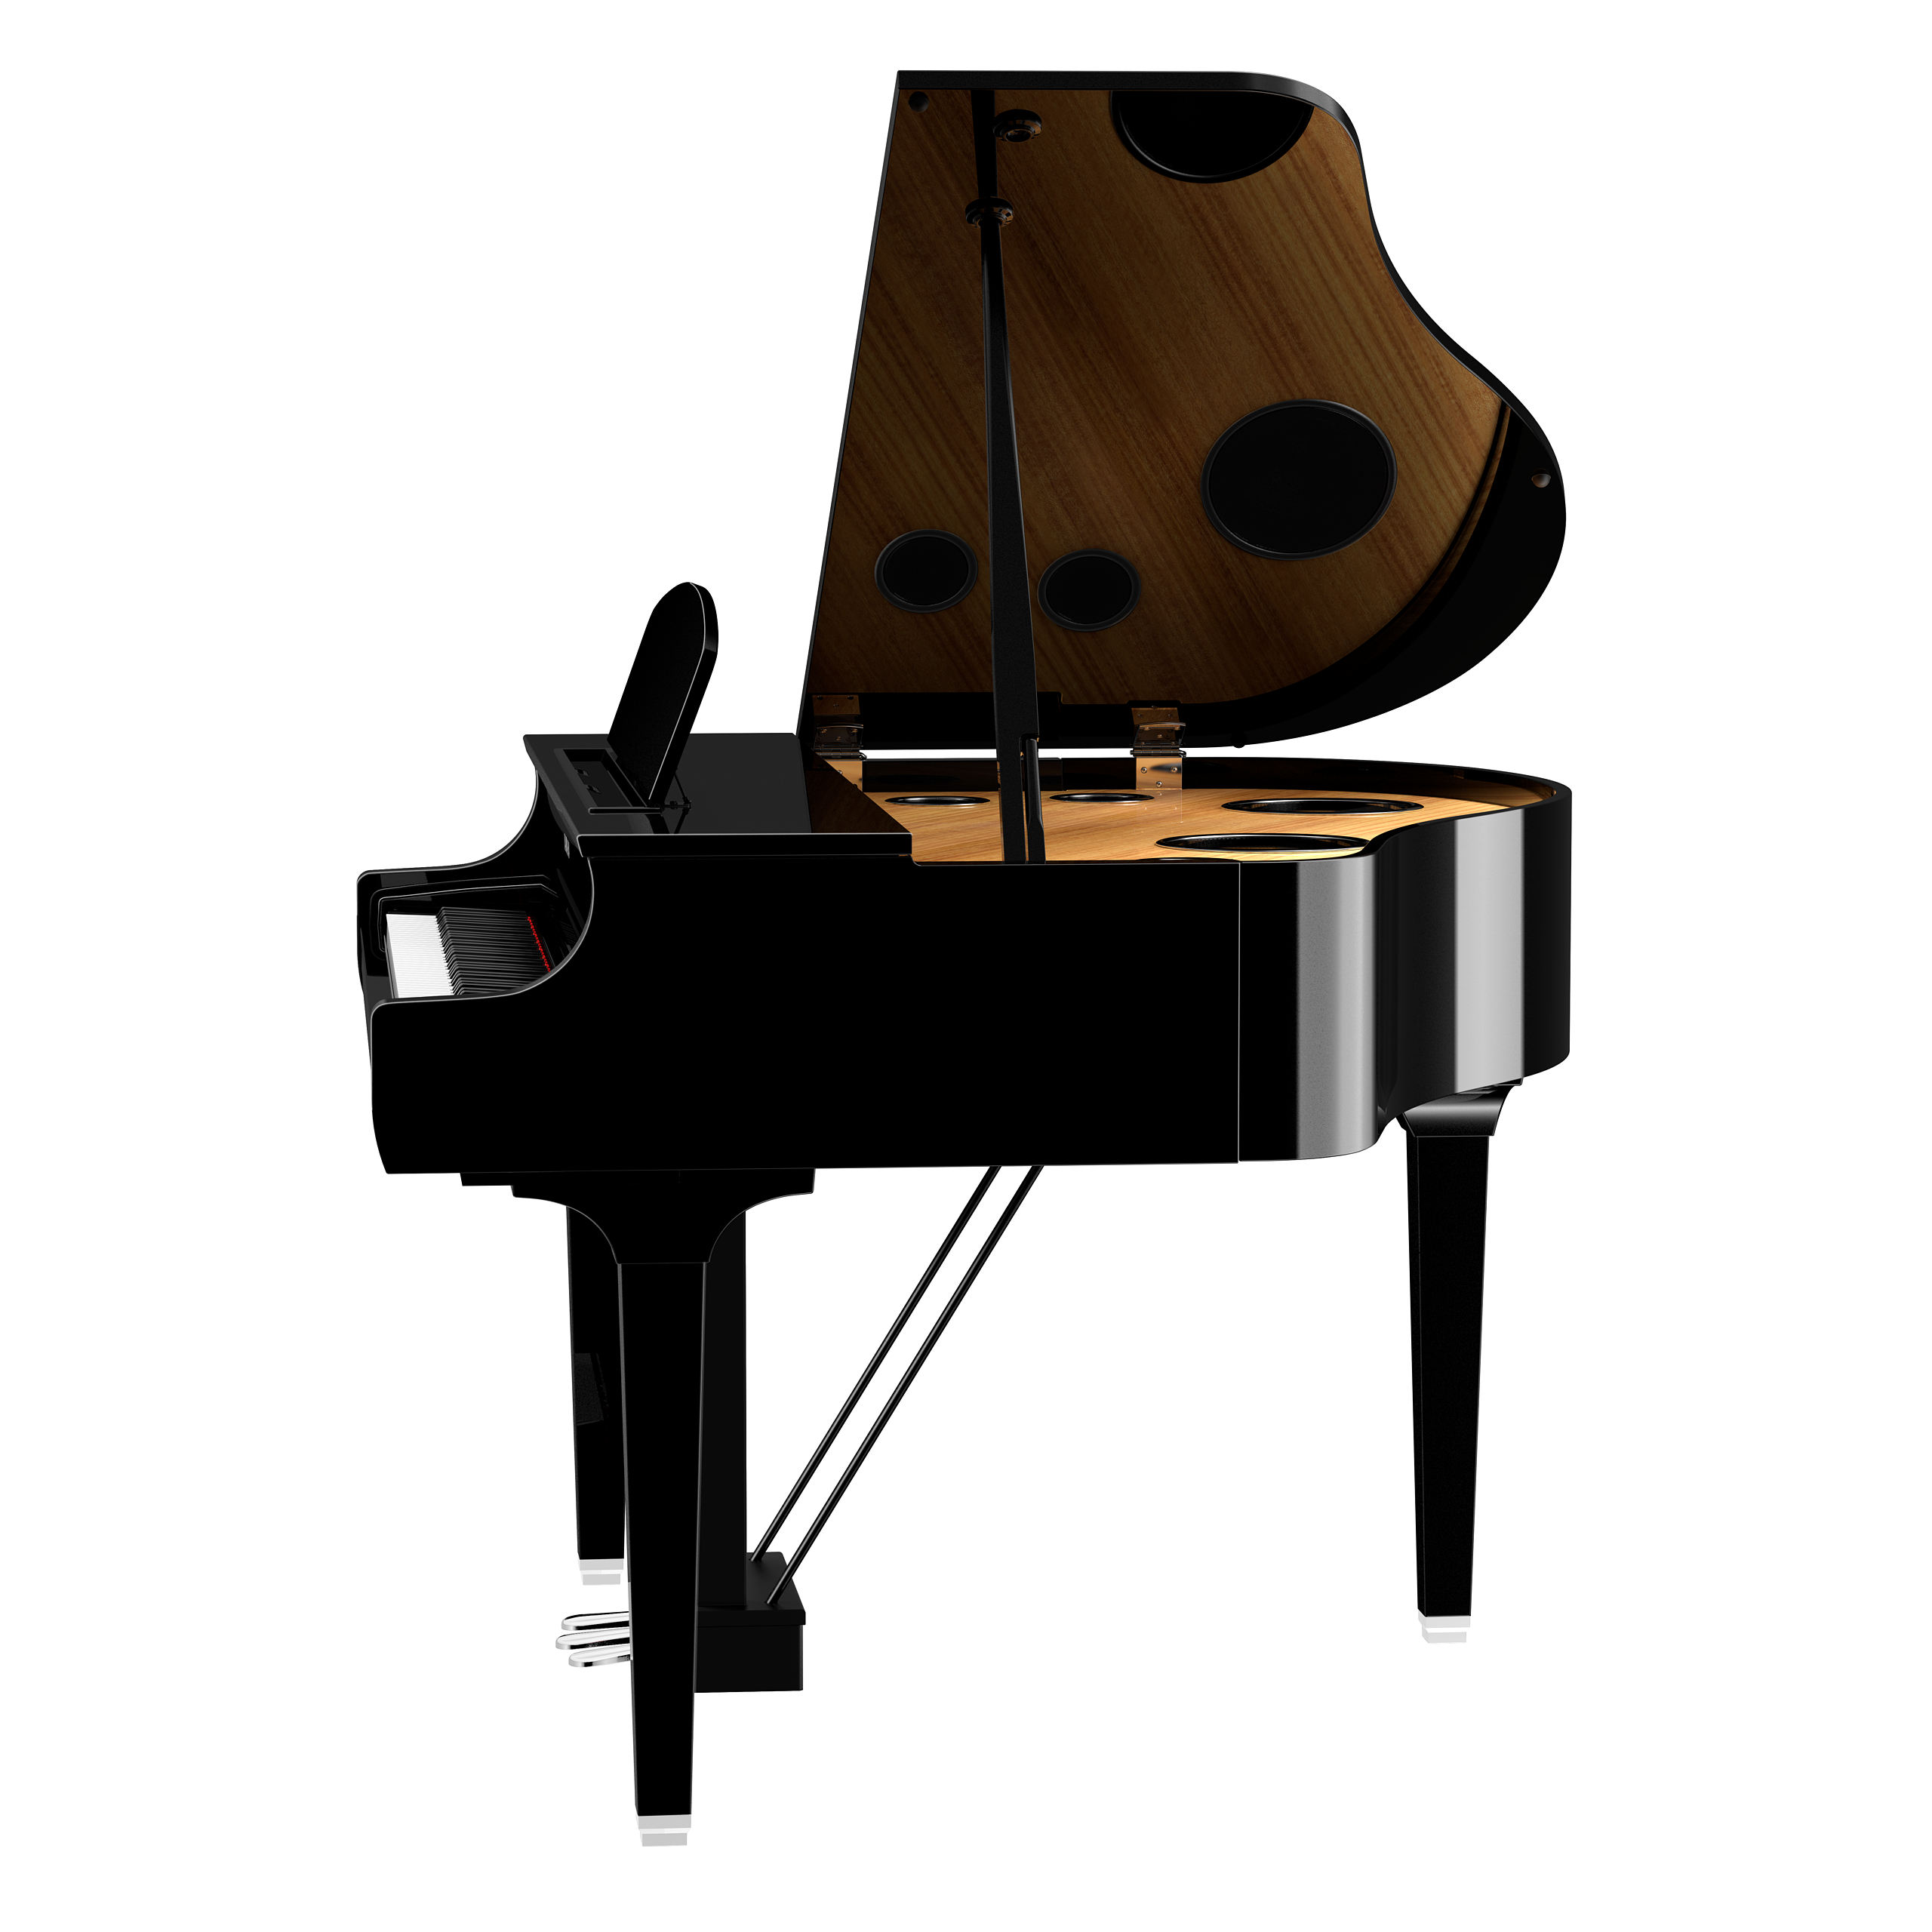 Yamaha Clp 795 Gp - Digital piano with stand - Variation 2